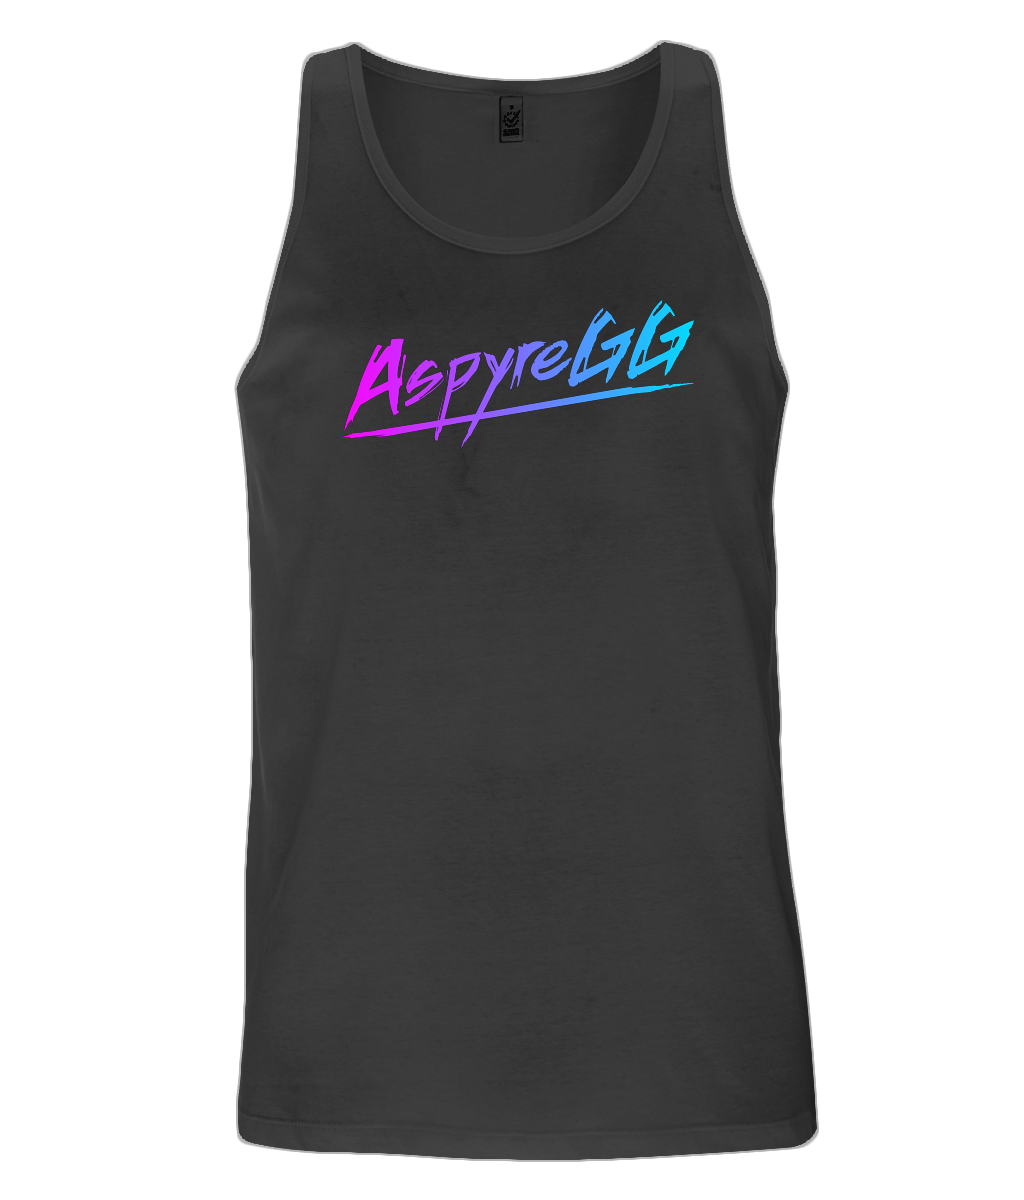 AspyreGG Vest/Tank Top